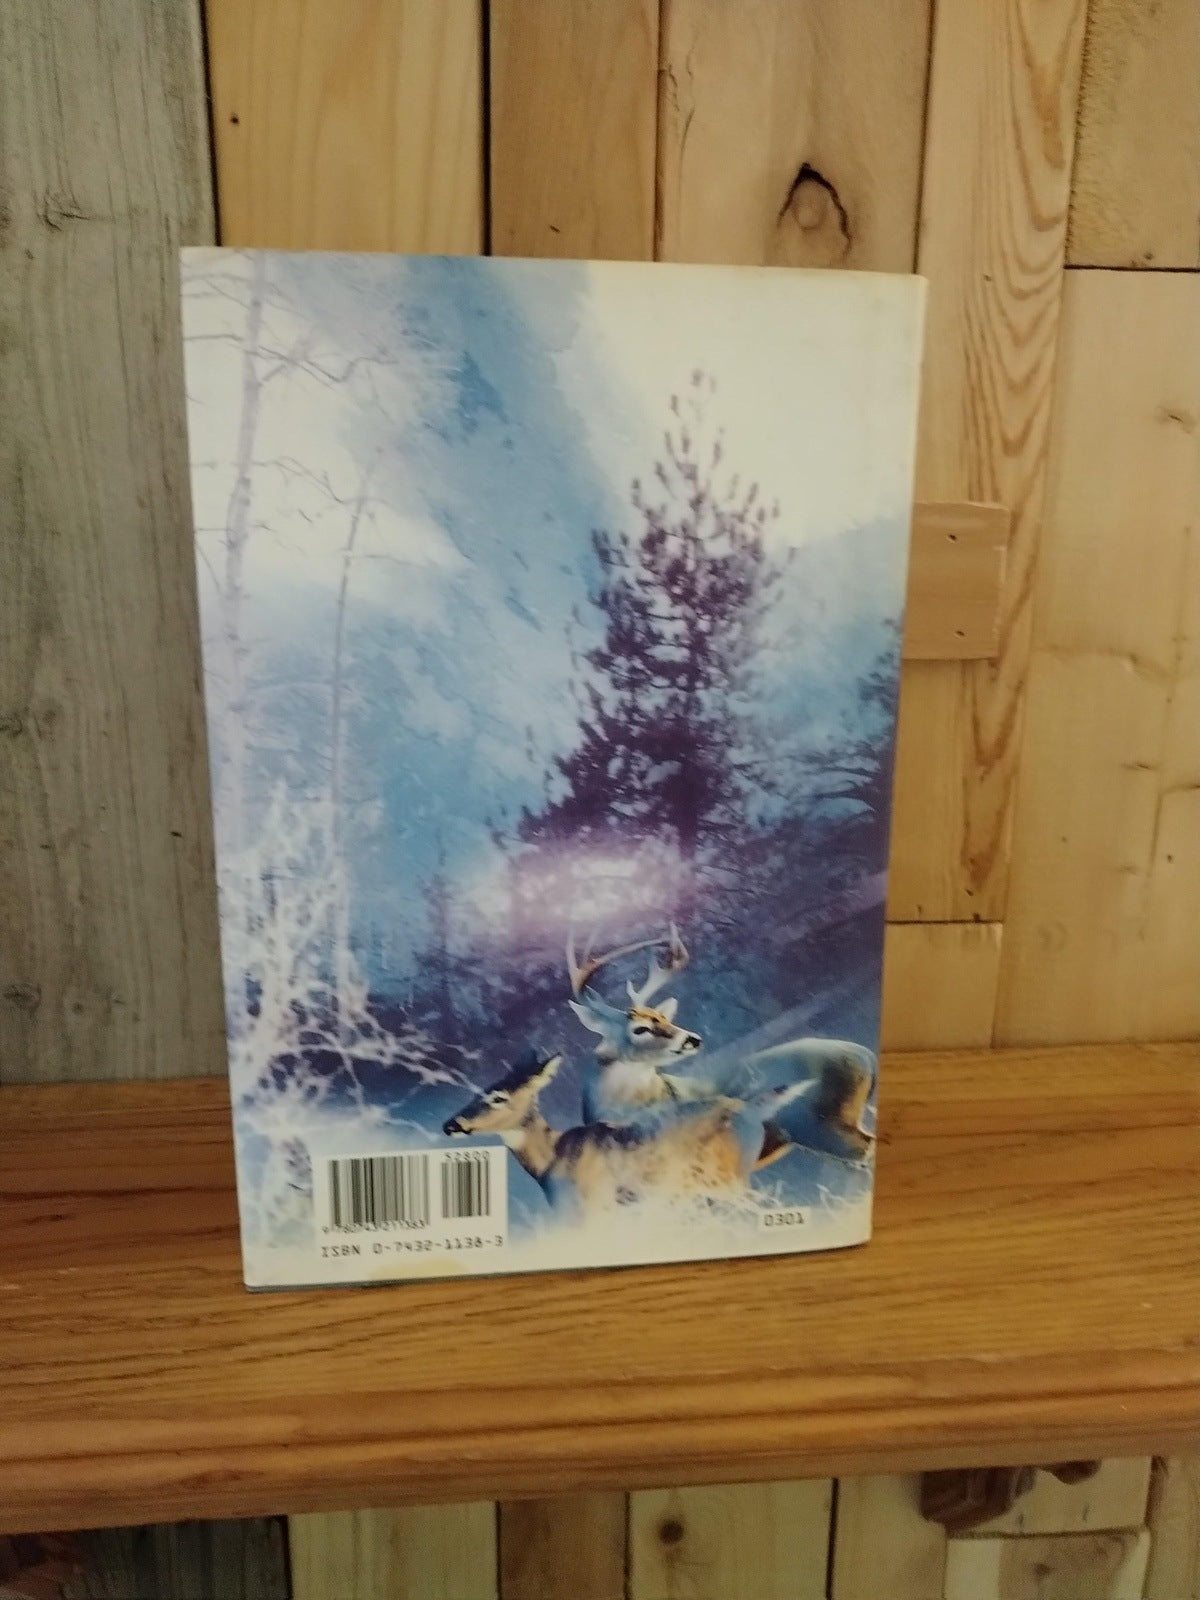 Stephen King Dreamcatcher First Edition Hardcover Good Condition Light Wear 13141HC